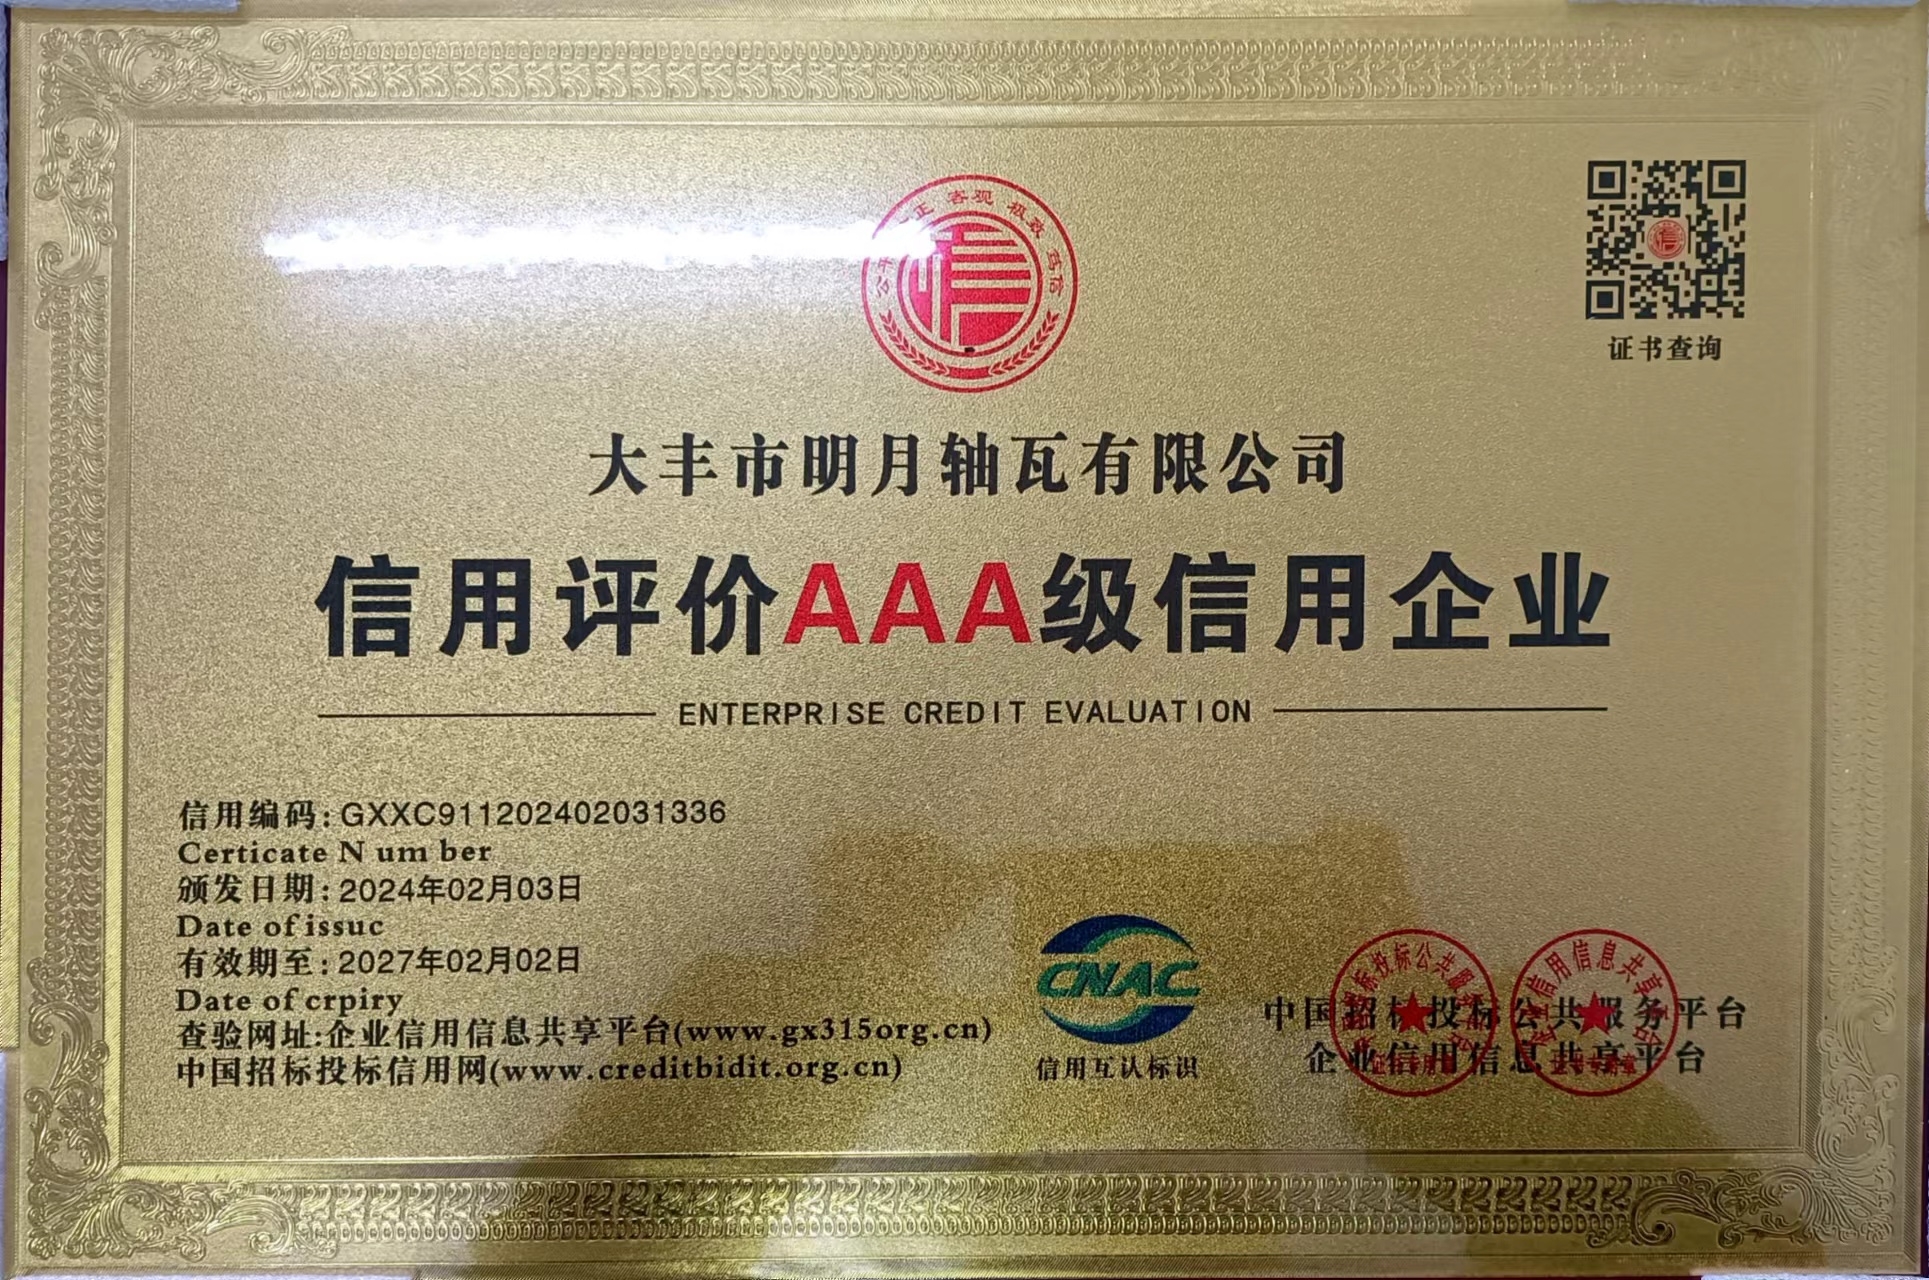 Dafeng Mingyue Bearing Bush Co.,LTDwon the honorary title of China AAA Credit Enterprise